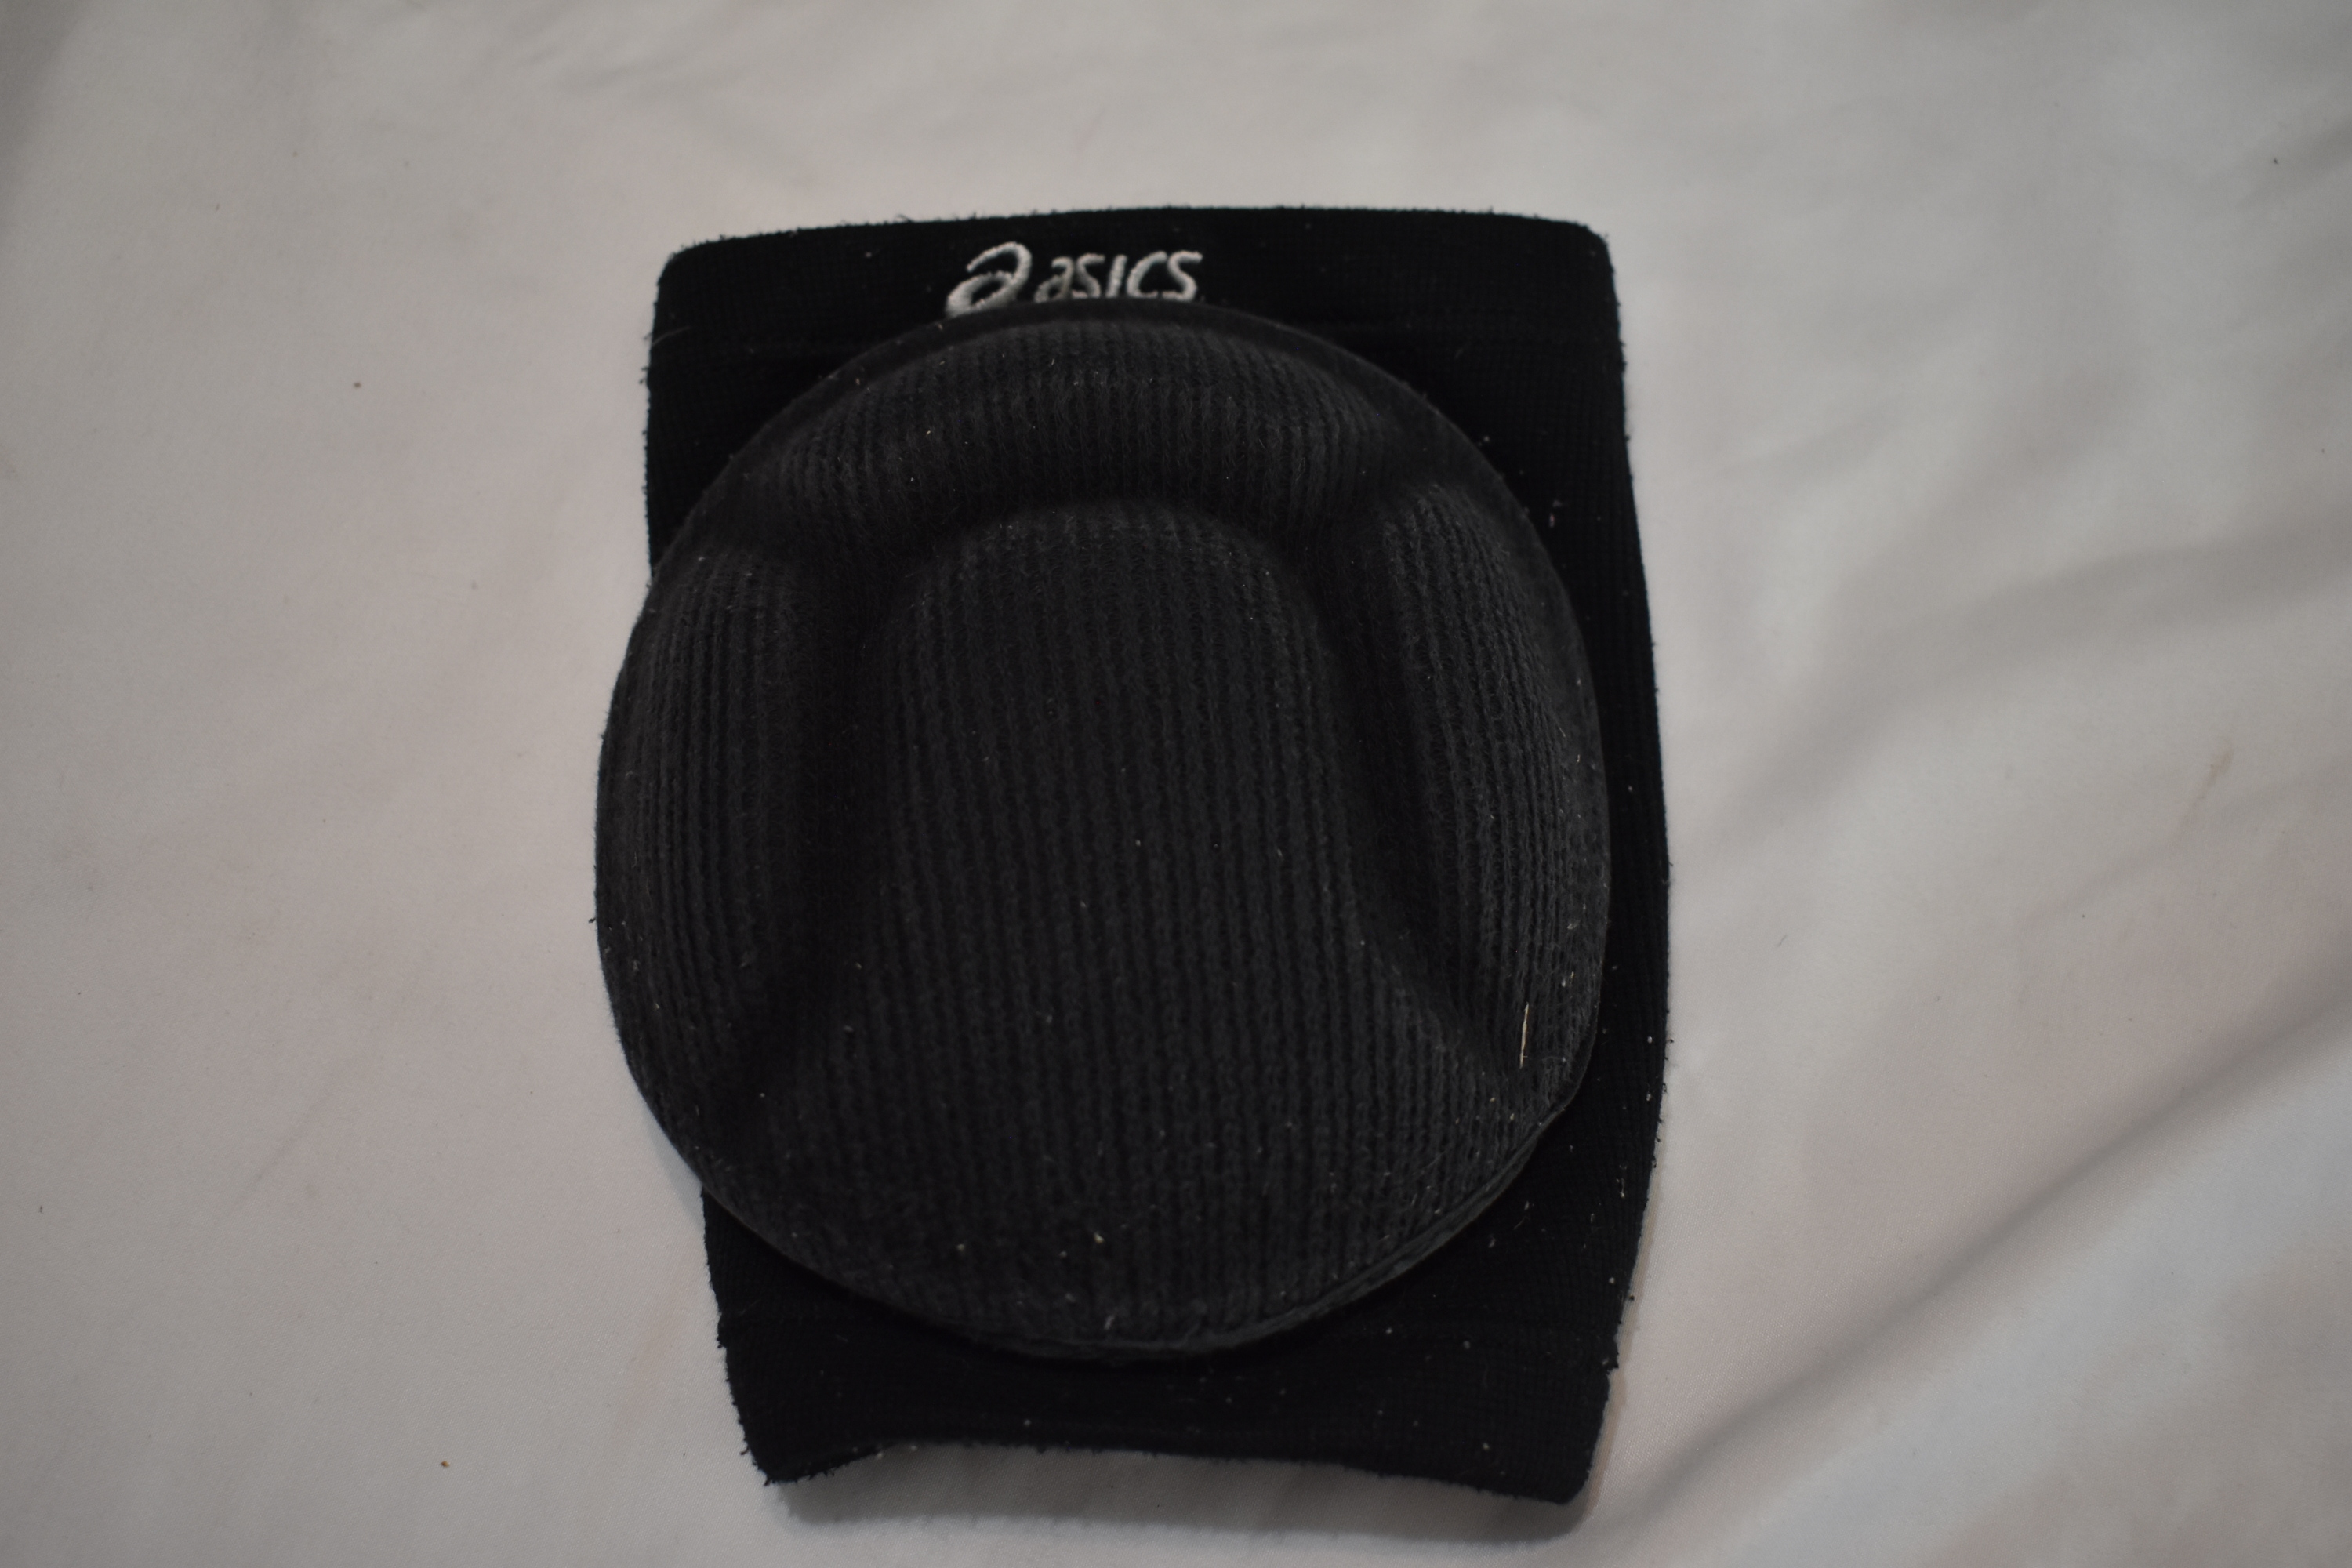 Asics Knee Pad, Black, One Size